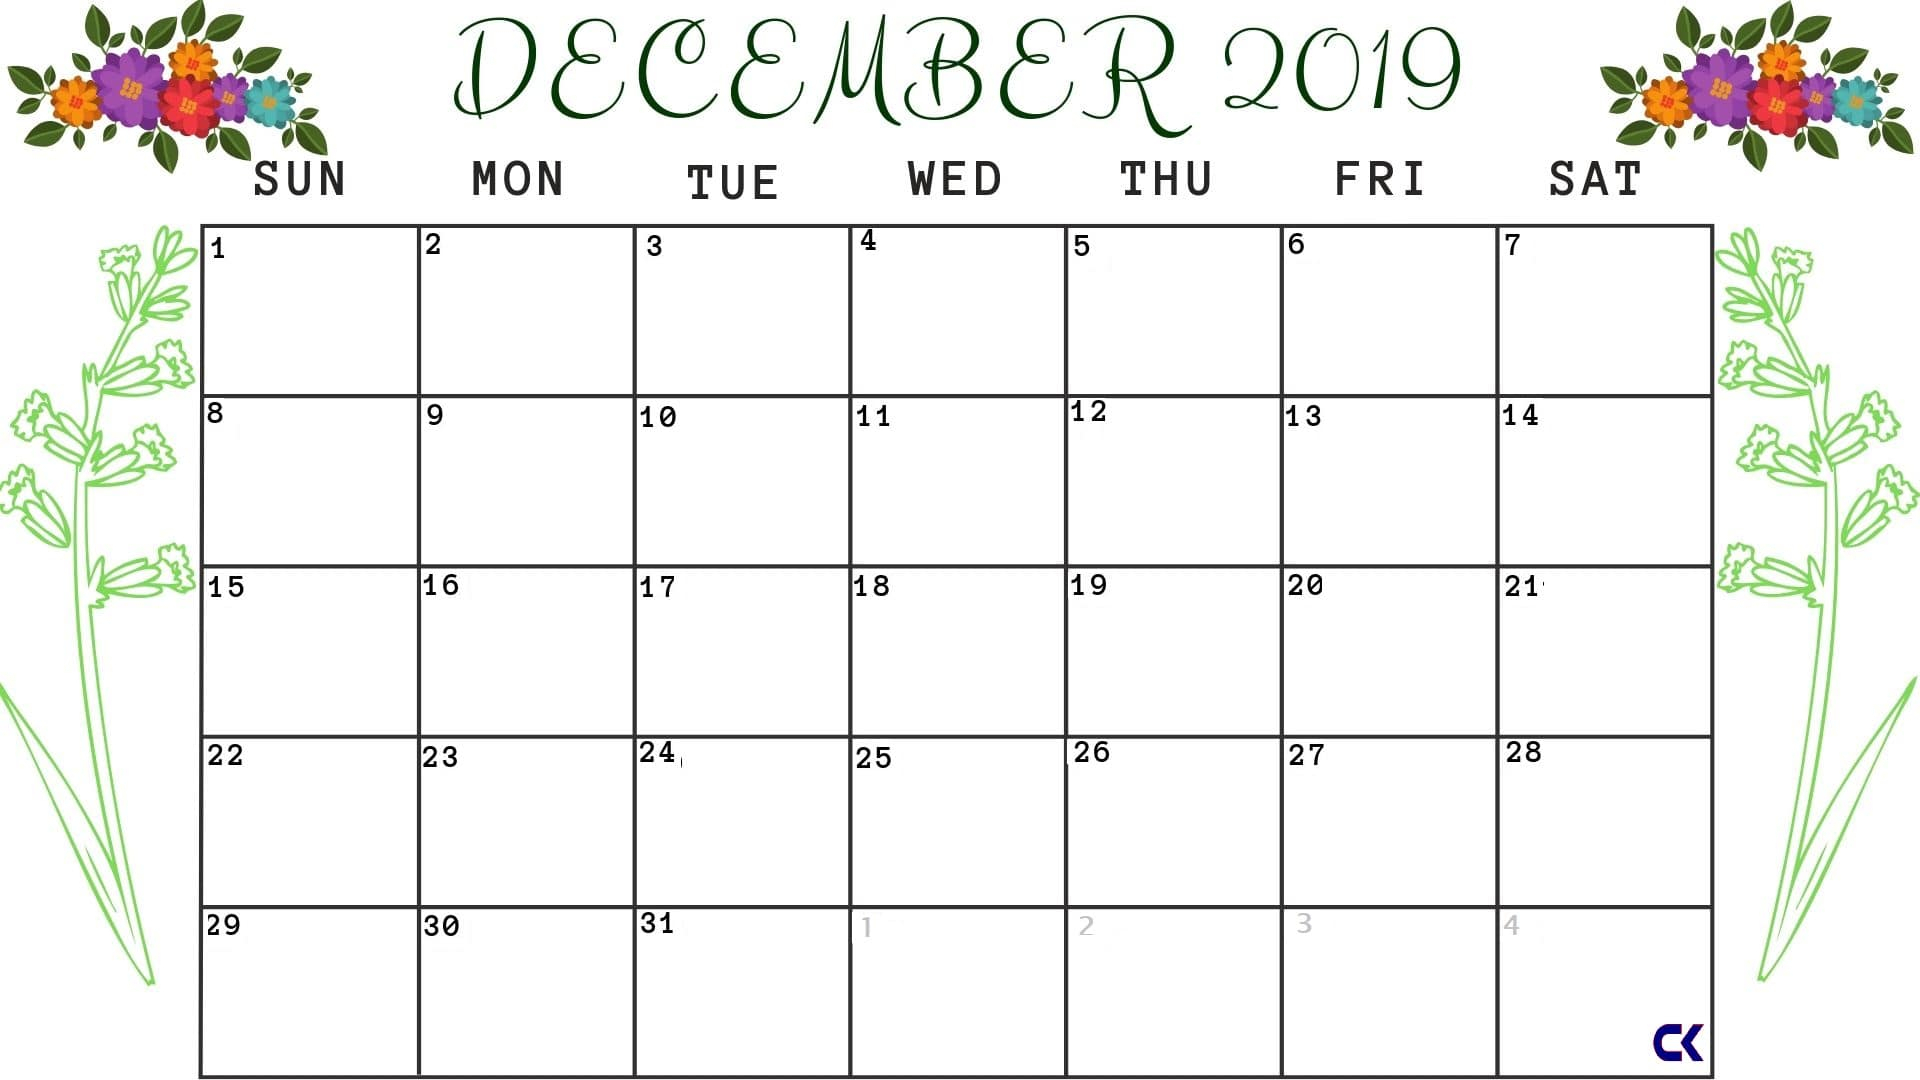 Printable December 2019 Calendar: Downloadable - Calendar-Kart